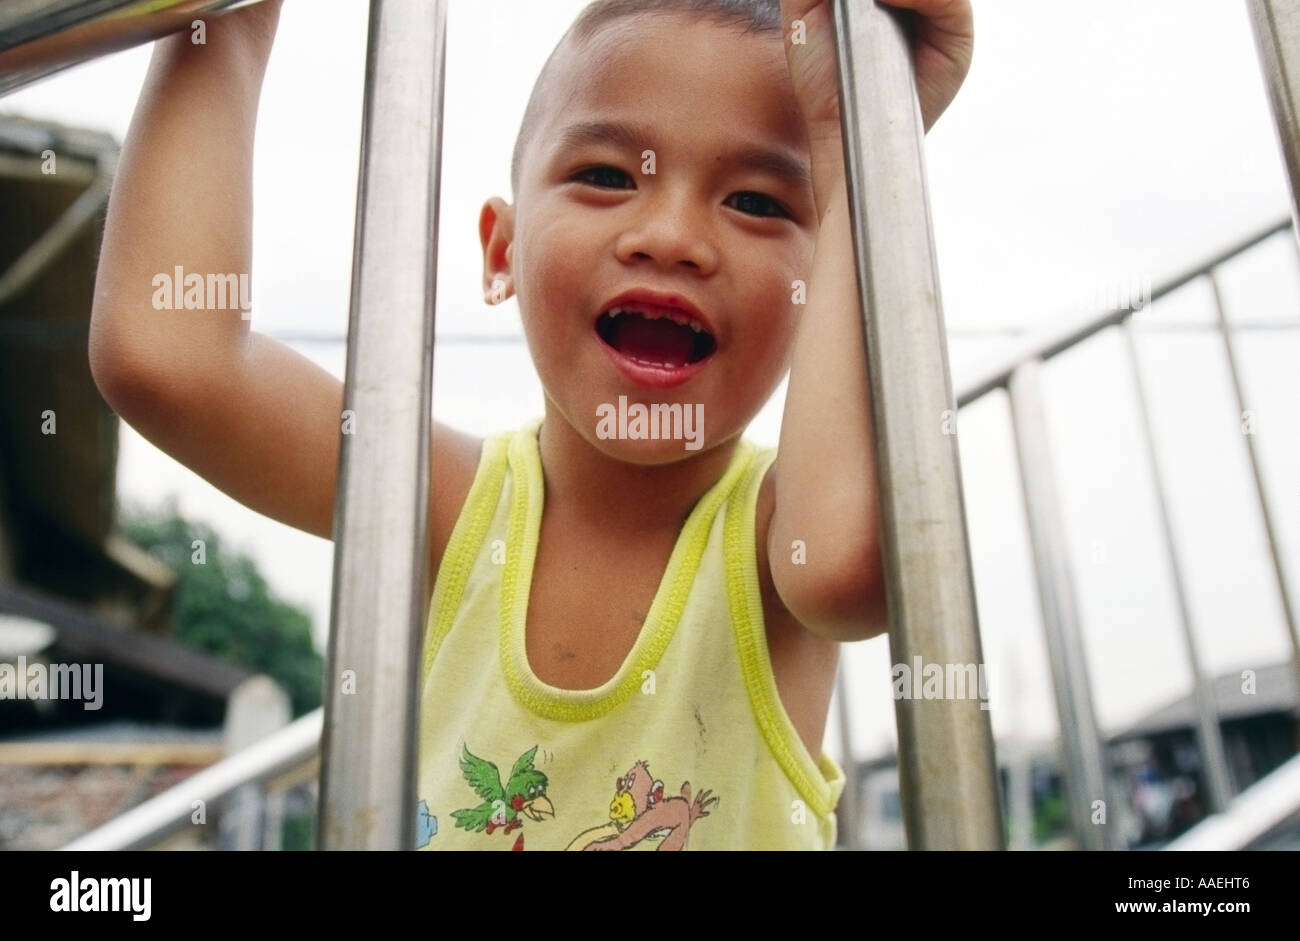 Thai boy smiling showing broken teeth Stock Photo